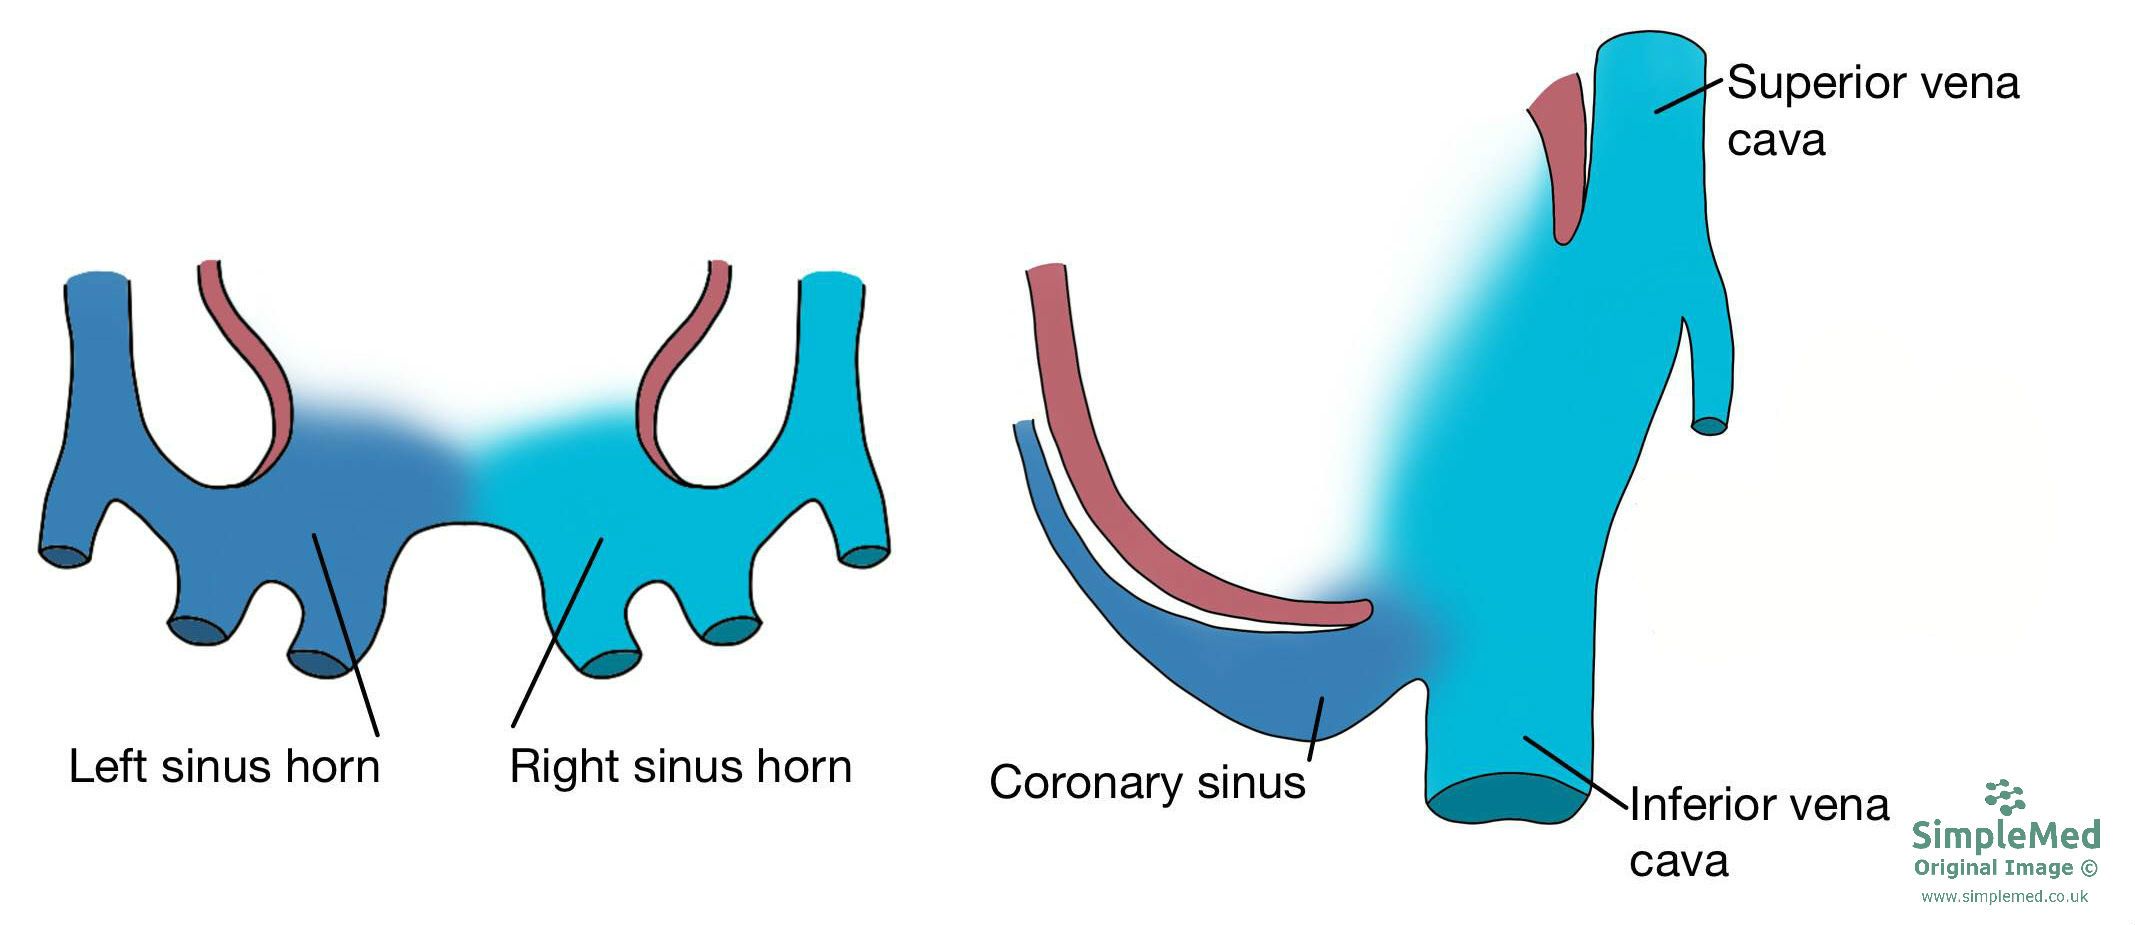 Sinus Horns Embryology SimpleMed